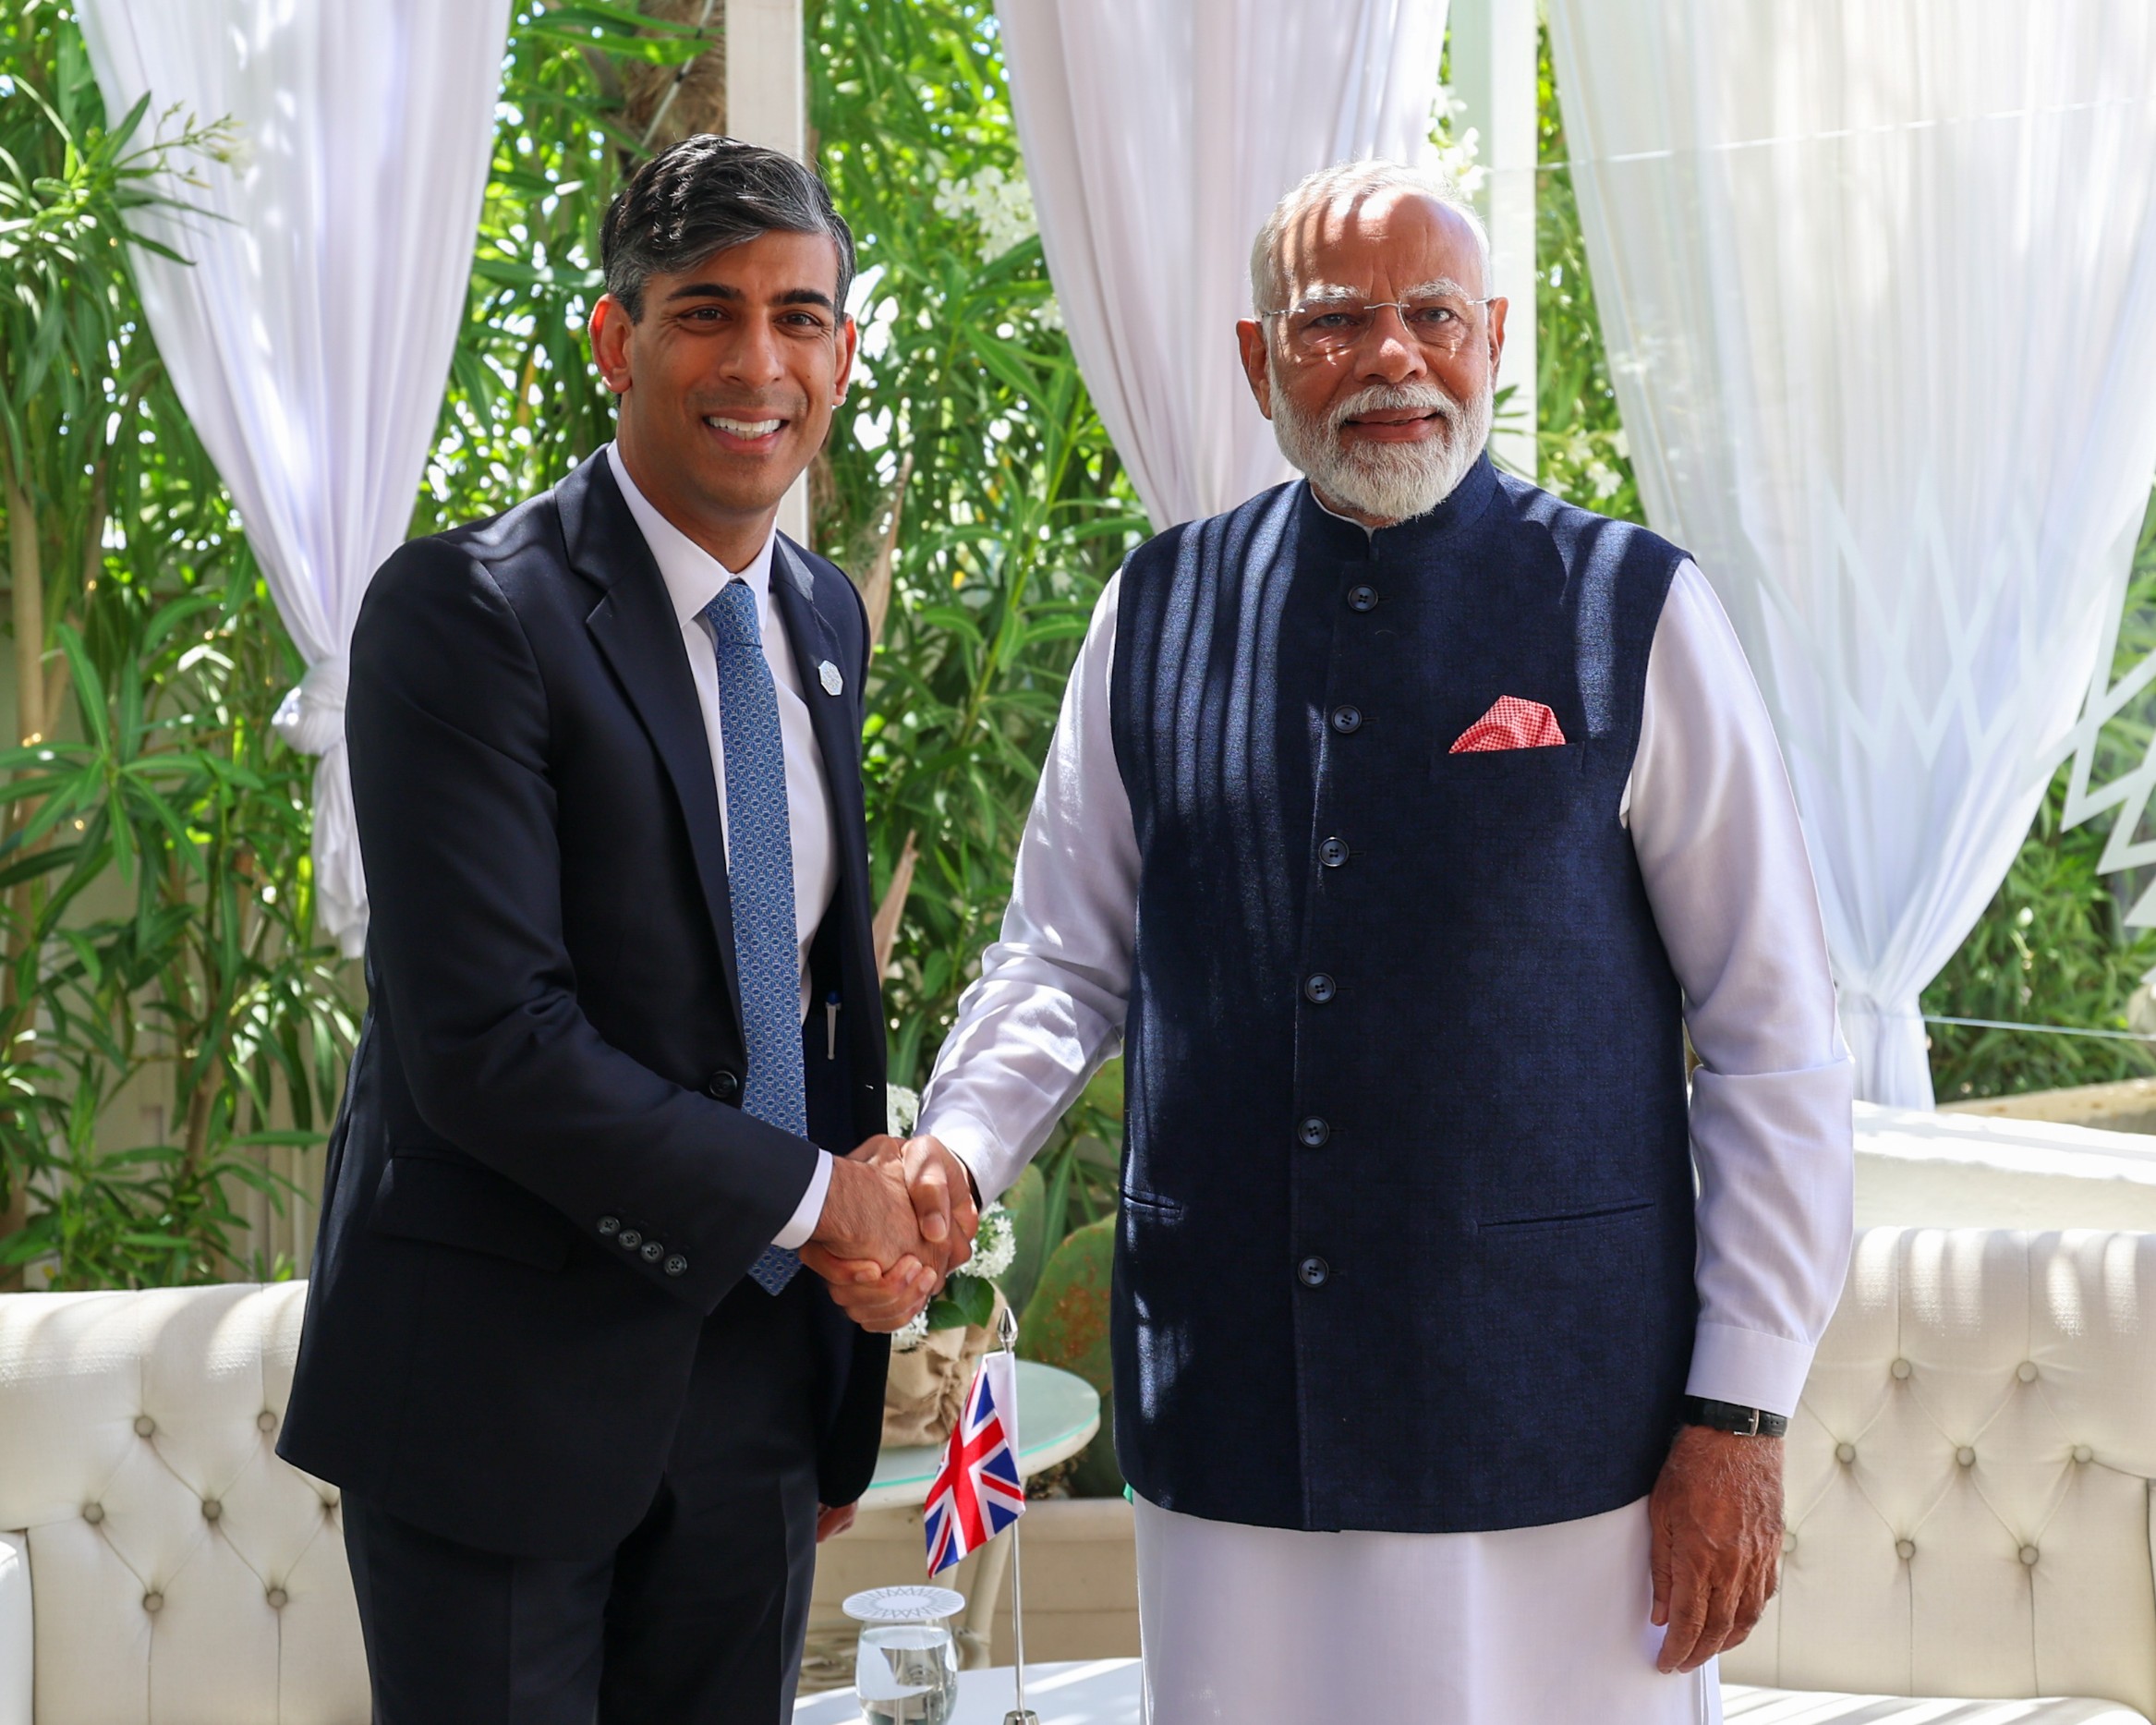 Modi Meets UK’s Sunak at G7 Summit